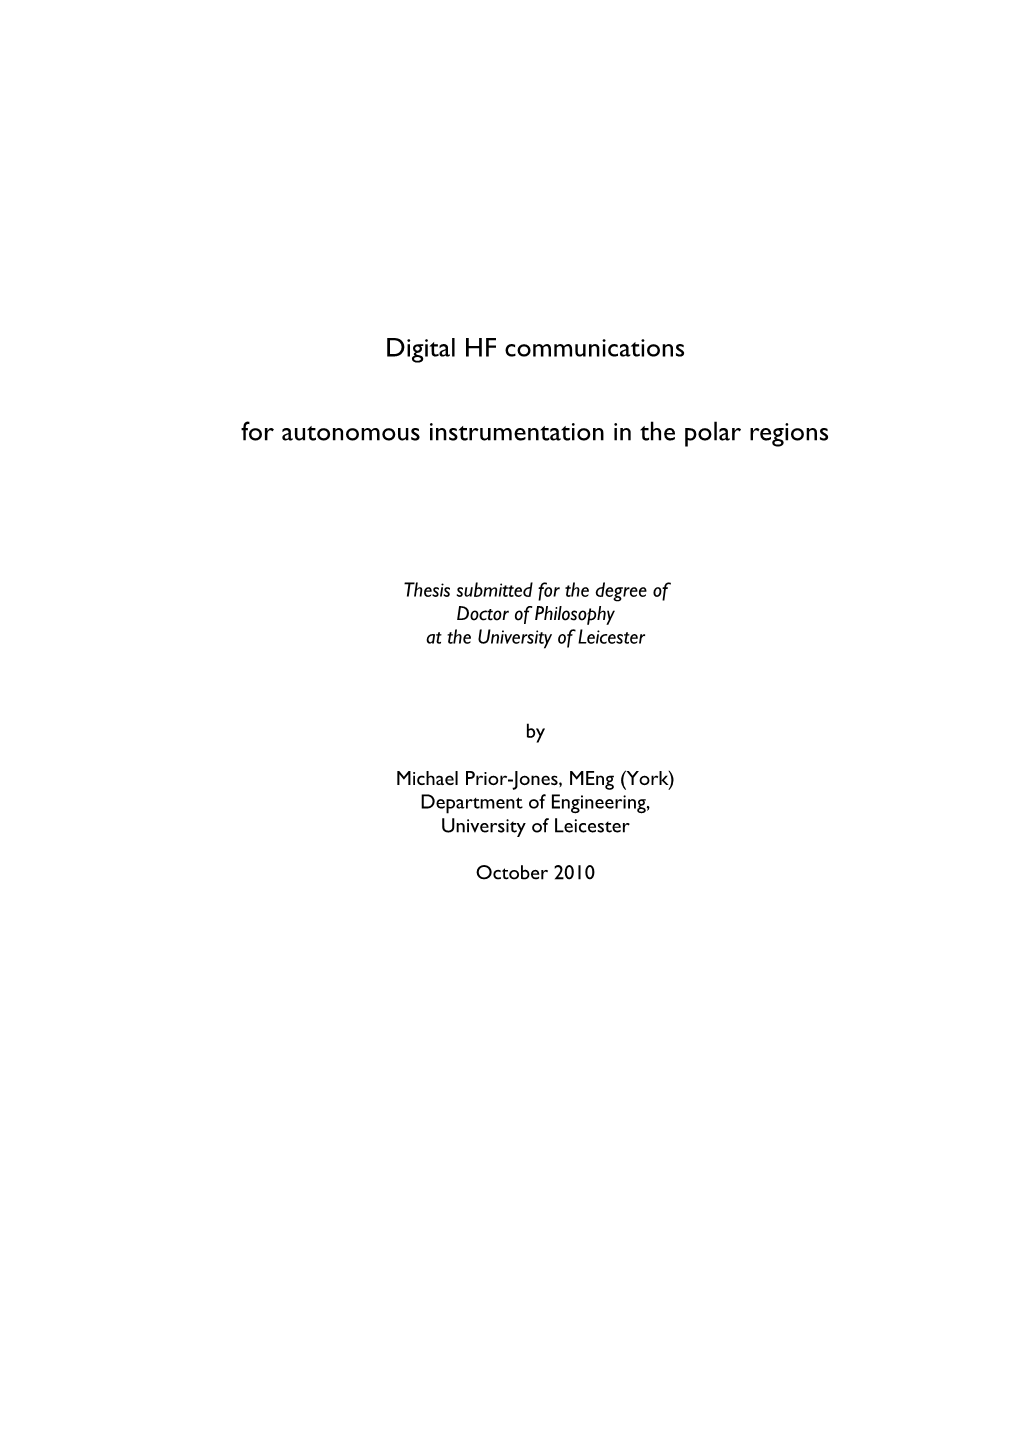 Digital HF Communications for Autonomous Instrumentation in the Polar Regions